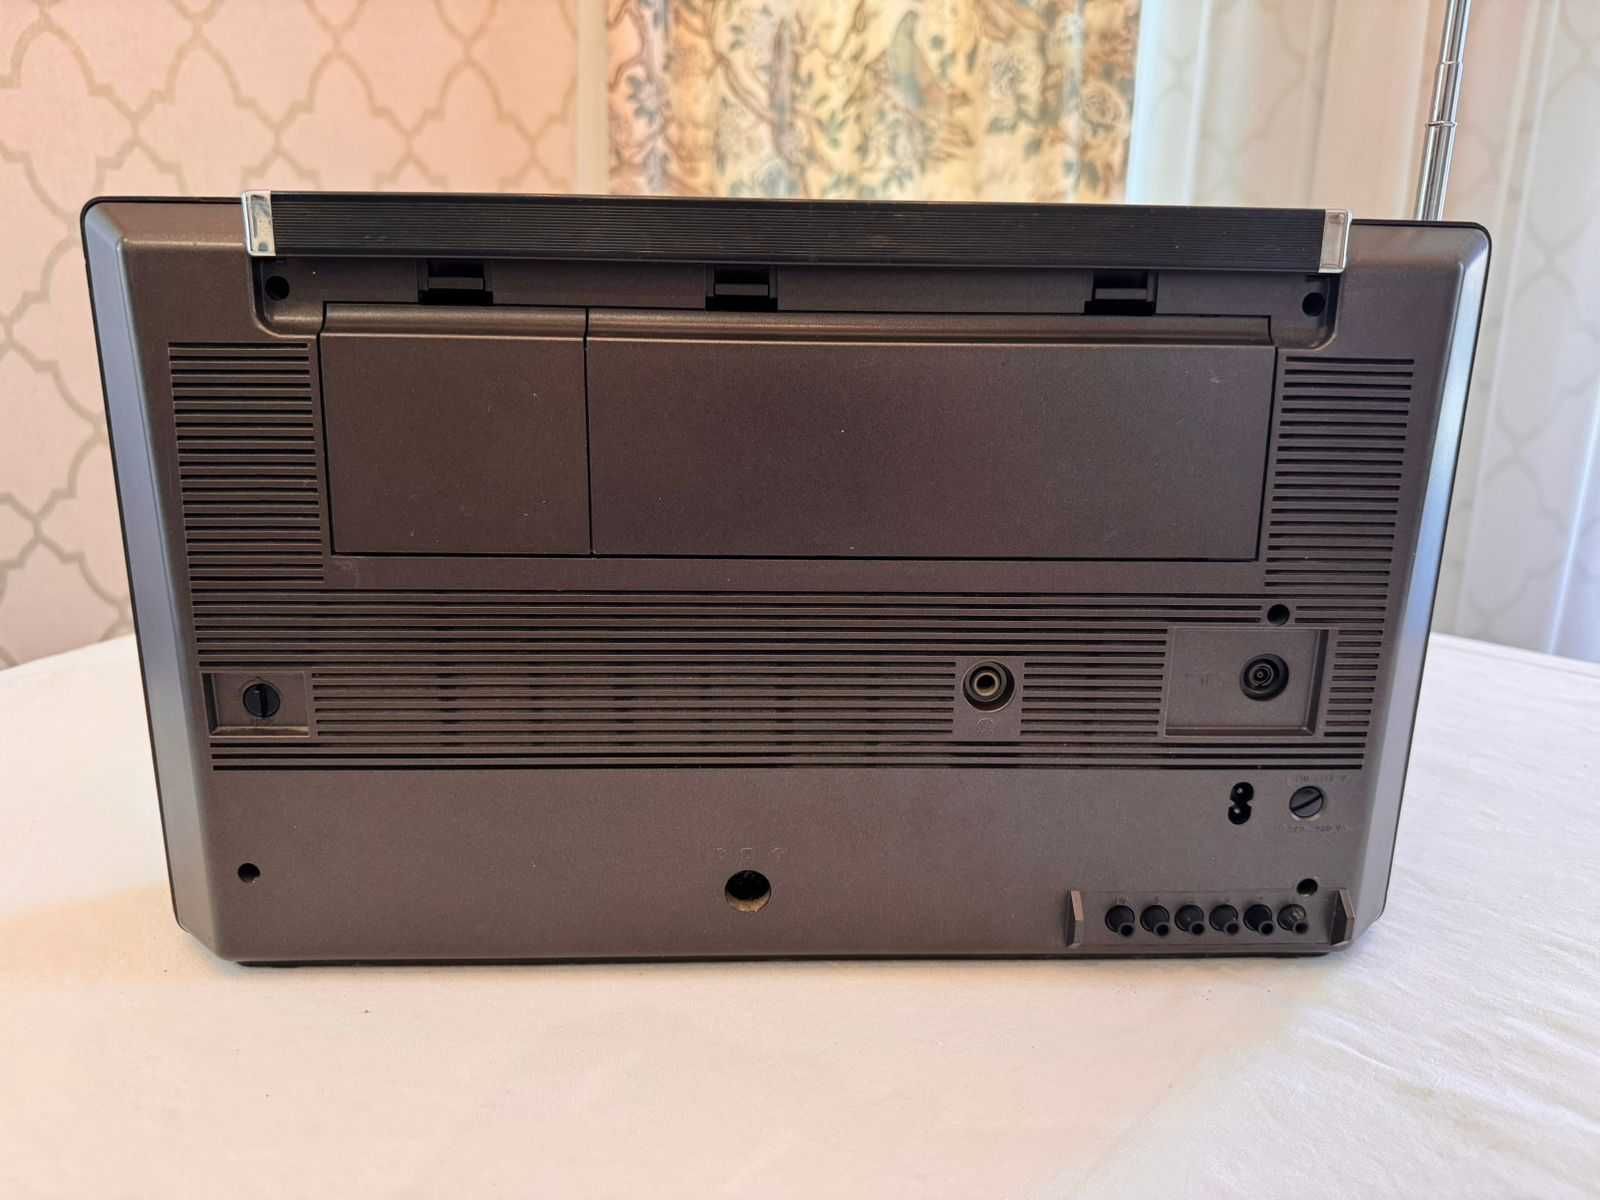 Grundig RR3000 Stereo Radio Cassete Recorder